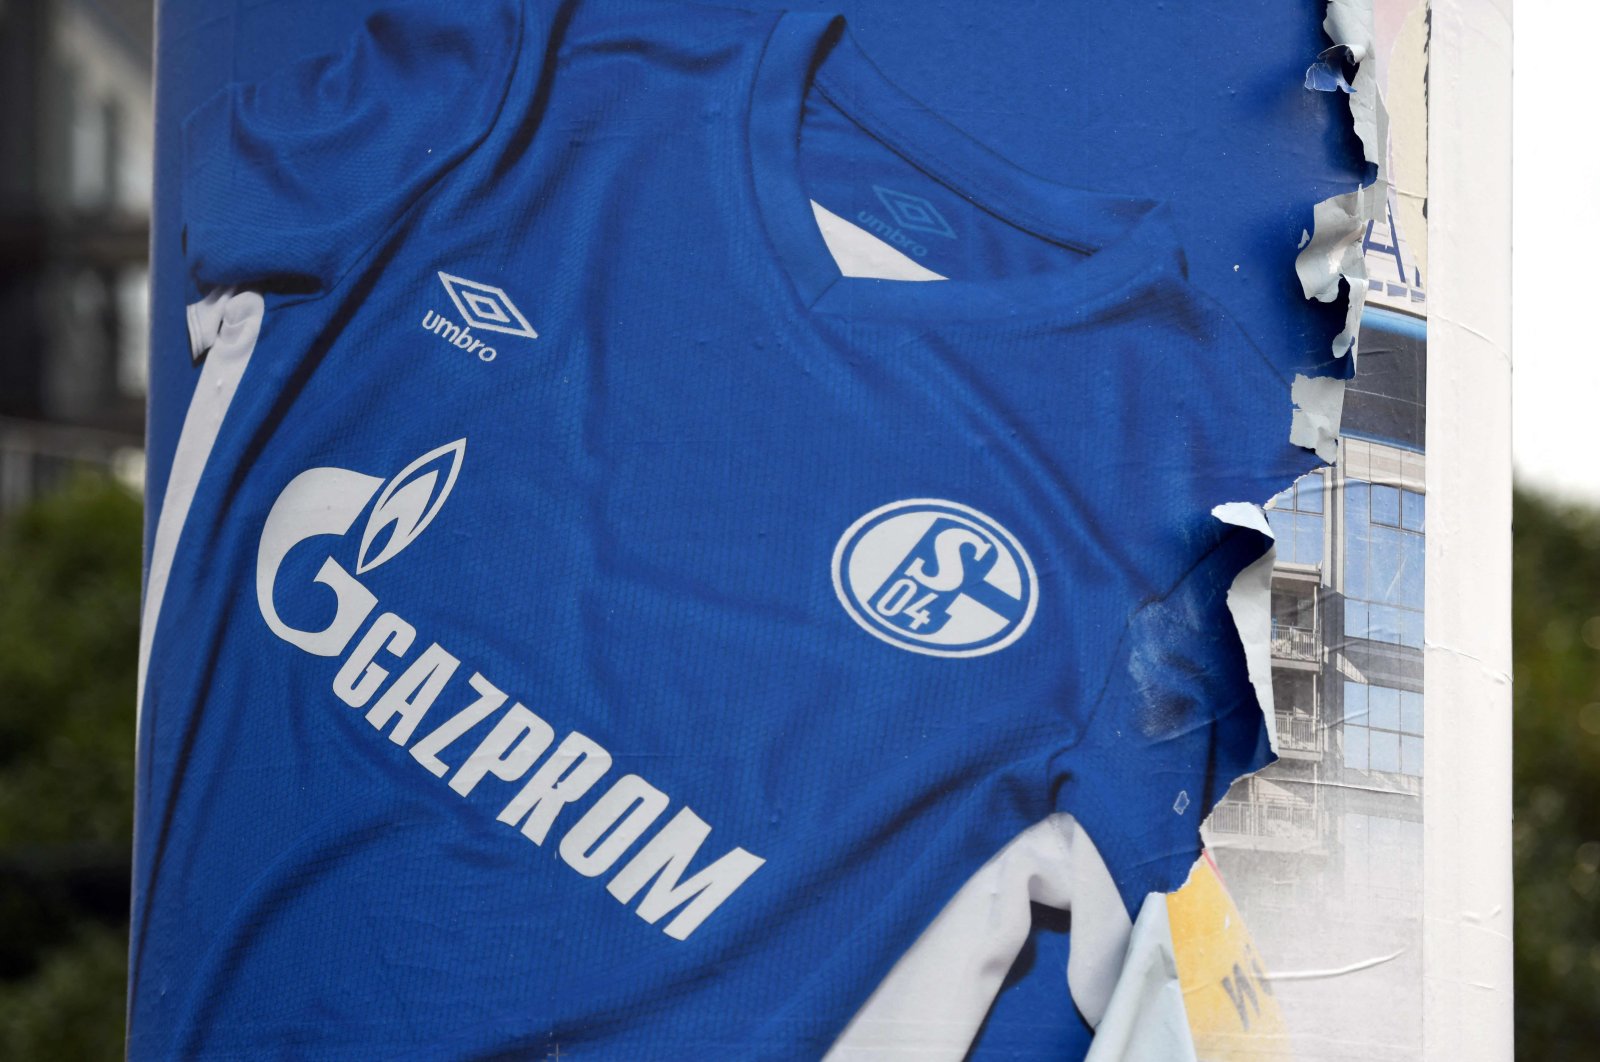 A poster shows a Schalke 04 shirt with the Gazprom logo, Gelsenkirchen, Germany, Feb. 25, 2022. (AFP Photo)